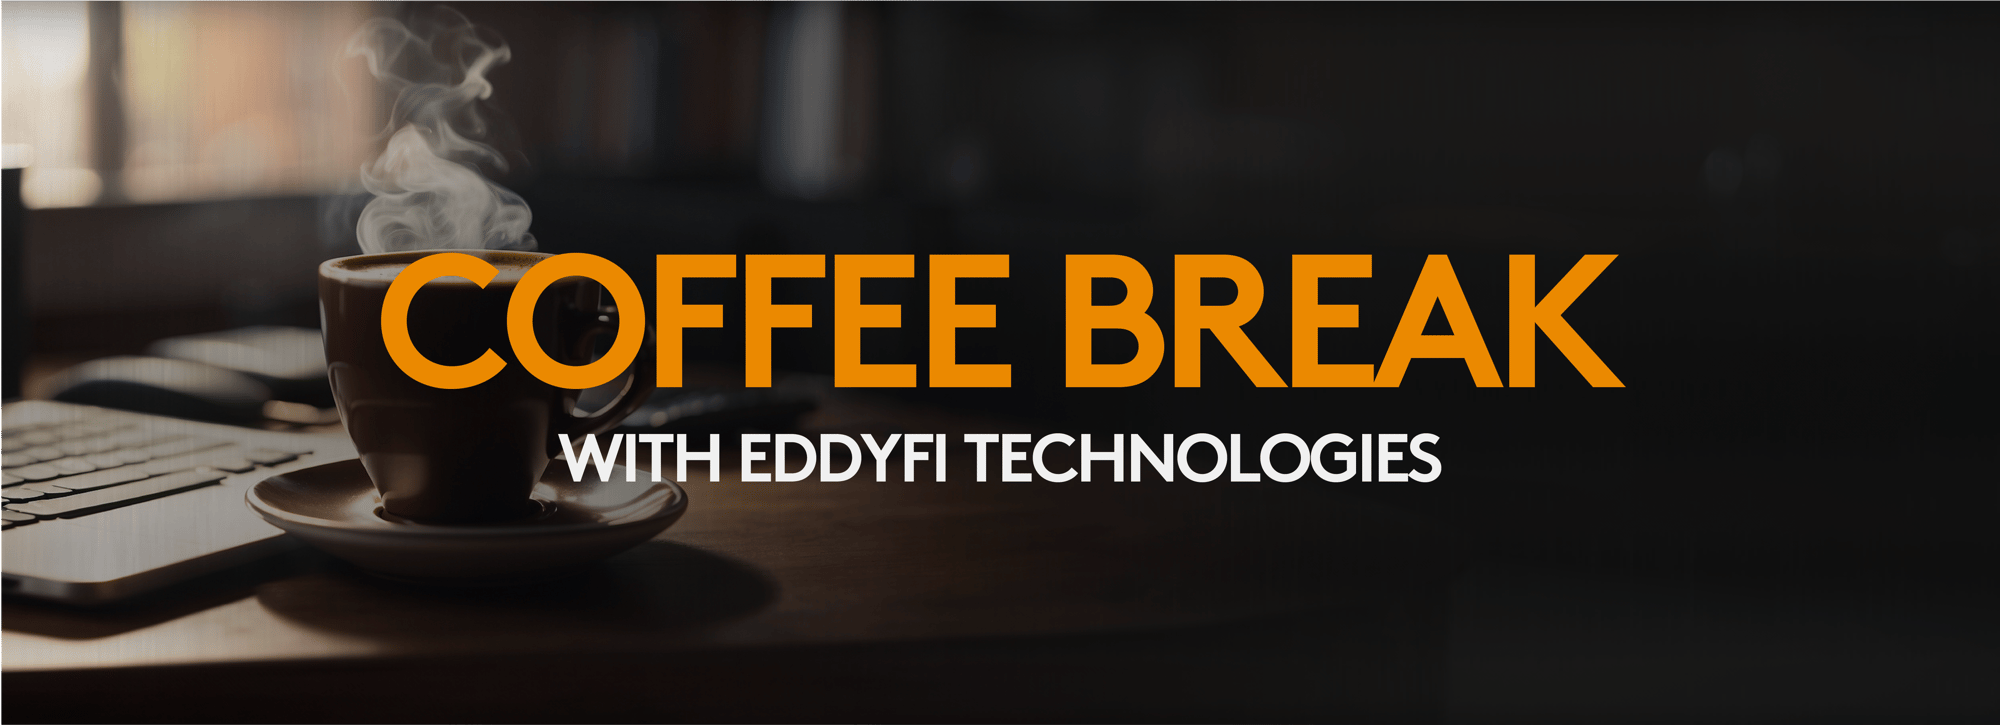 test coffee break header